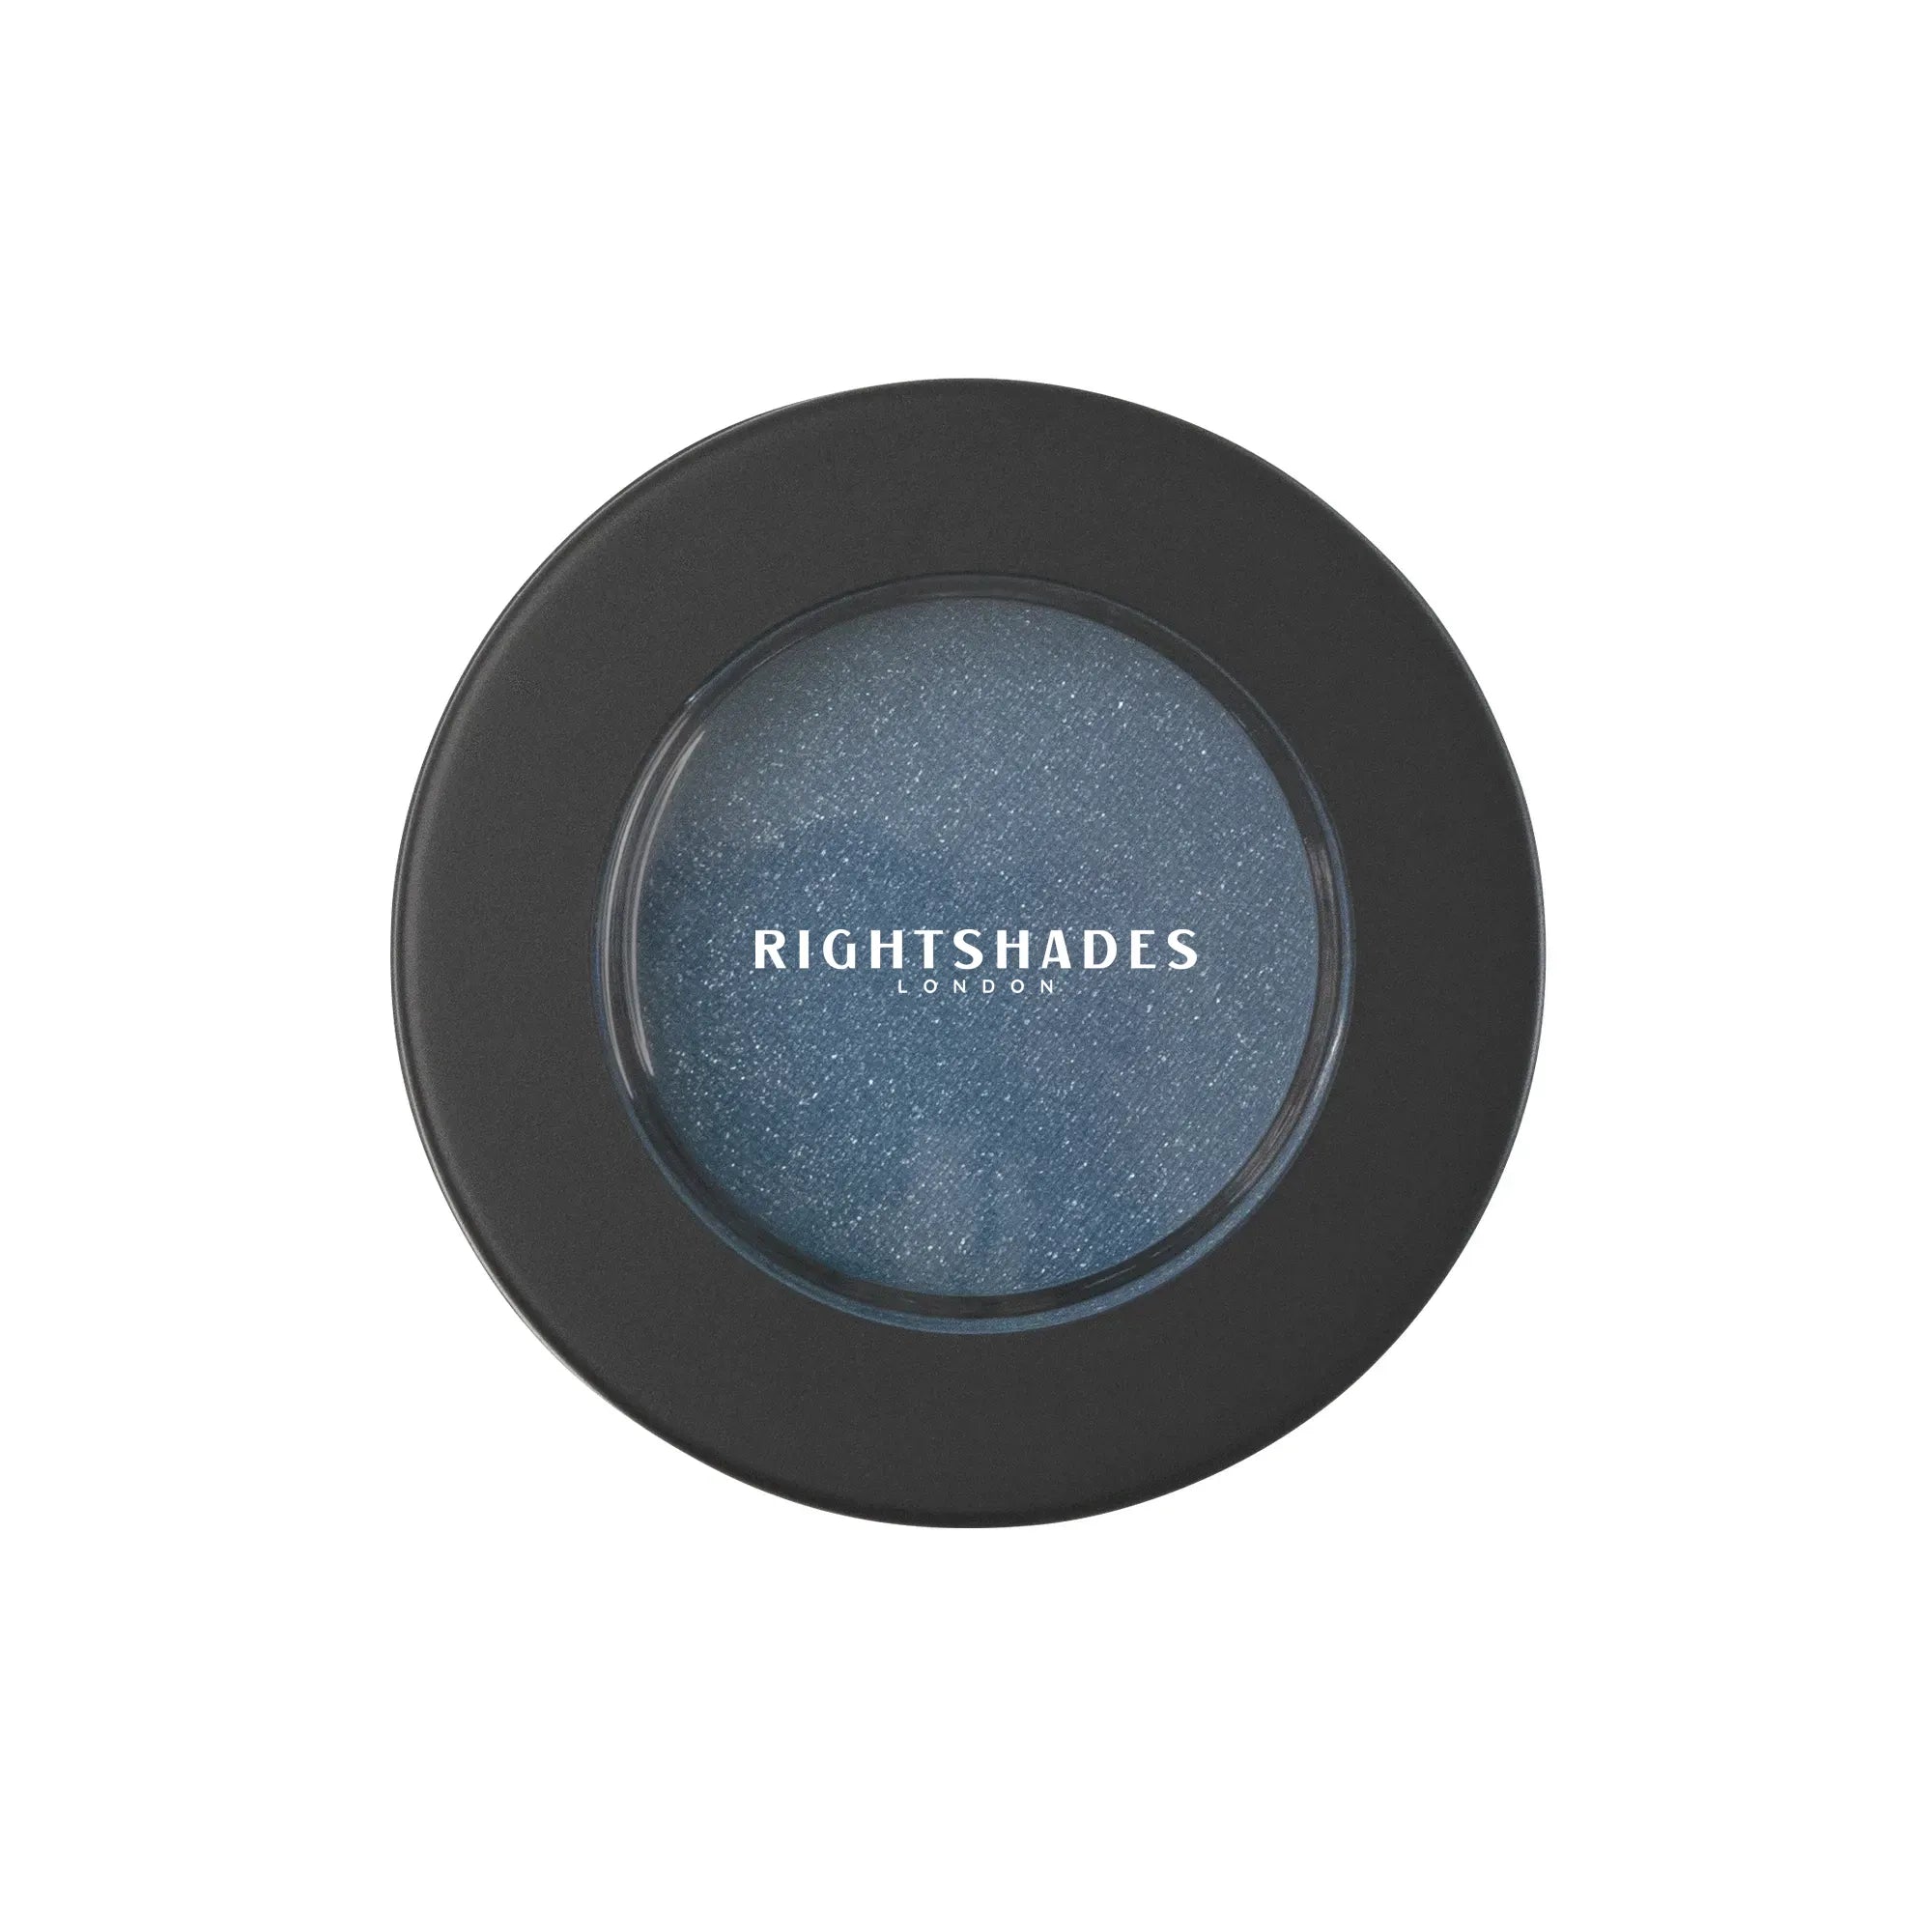 RightShades London - Single Pan Eyeshadow